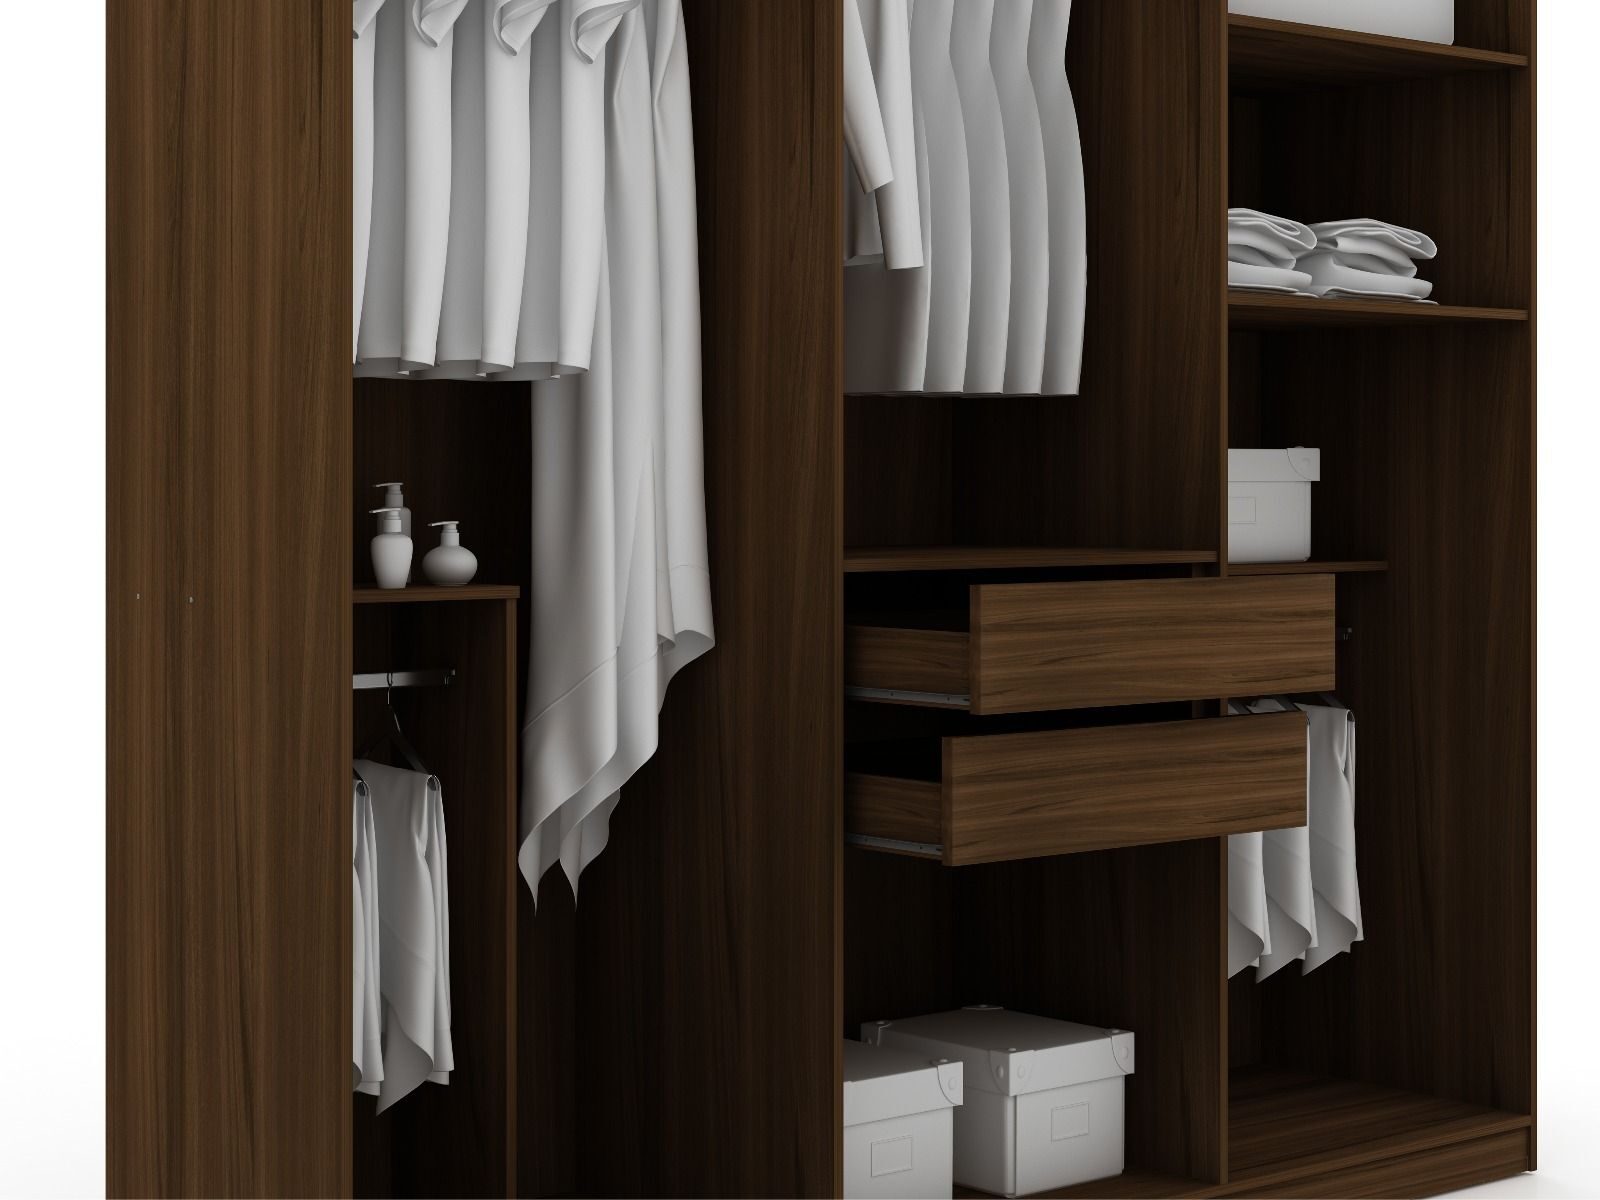 Manhattan Comfort Gramercy White Freestanding Wardrobe Armoire Closet